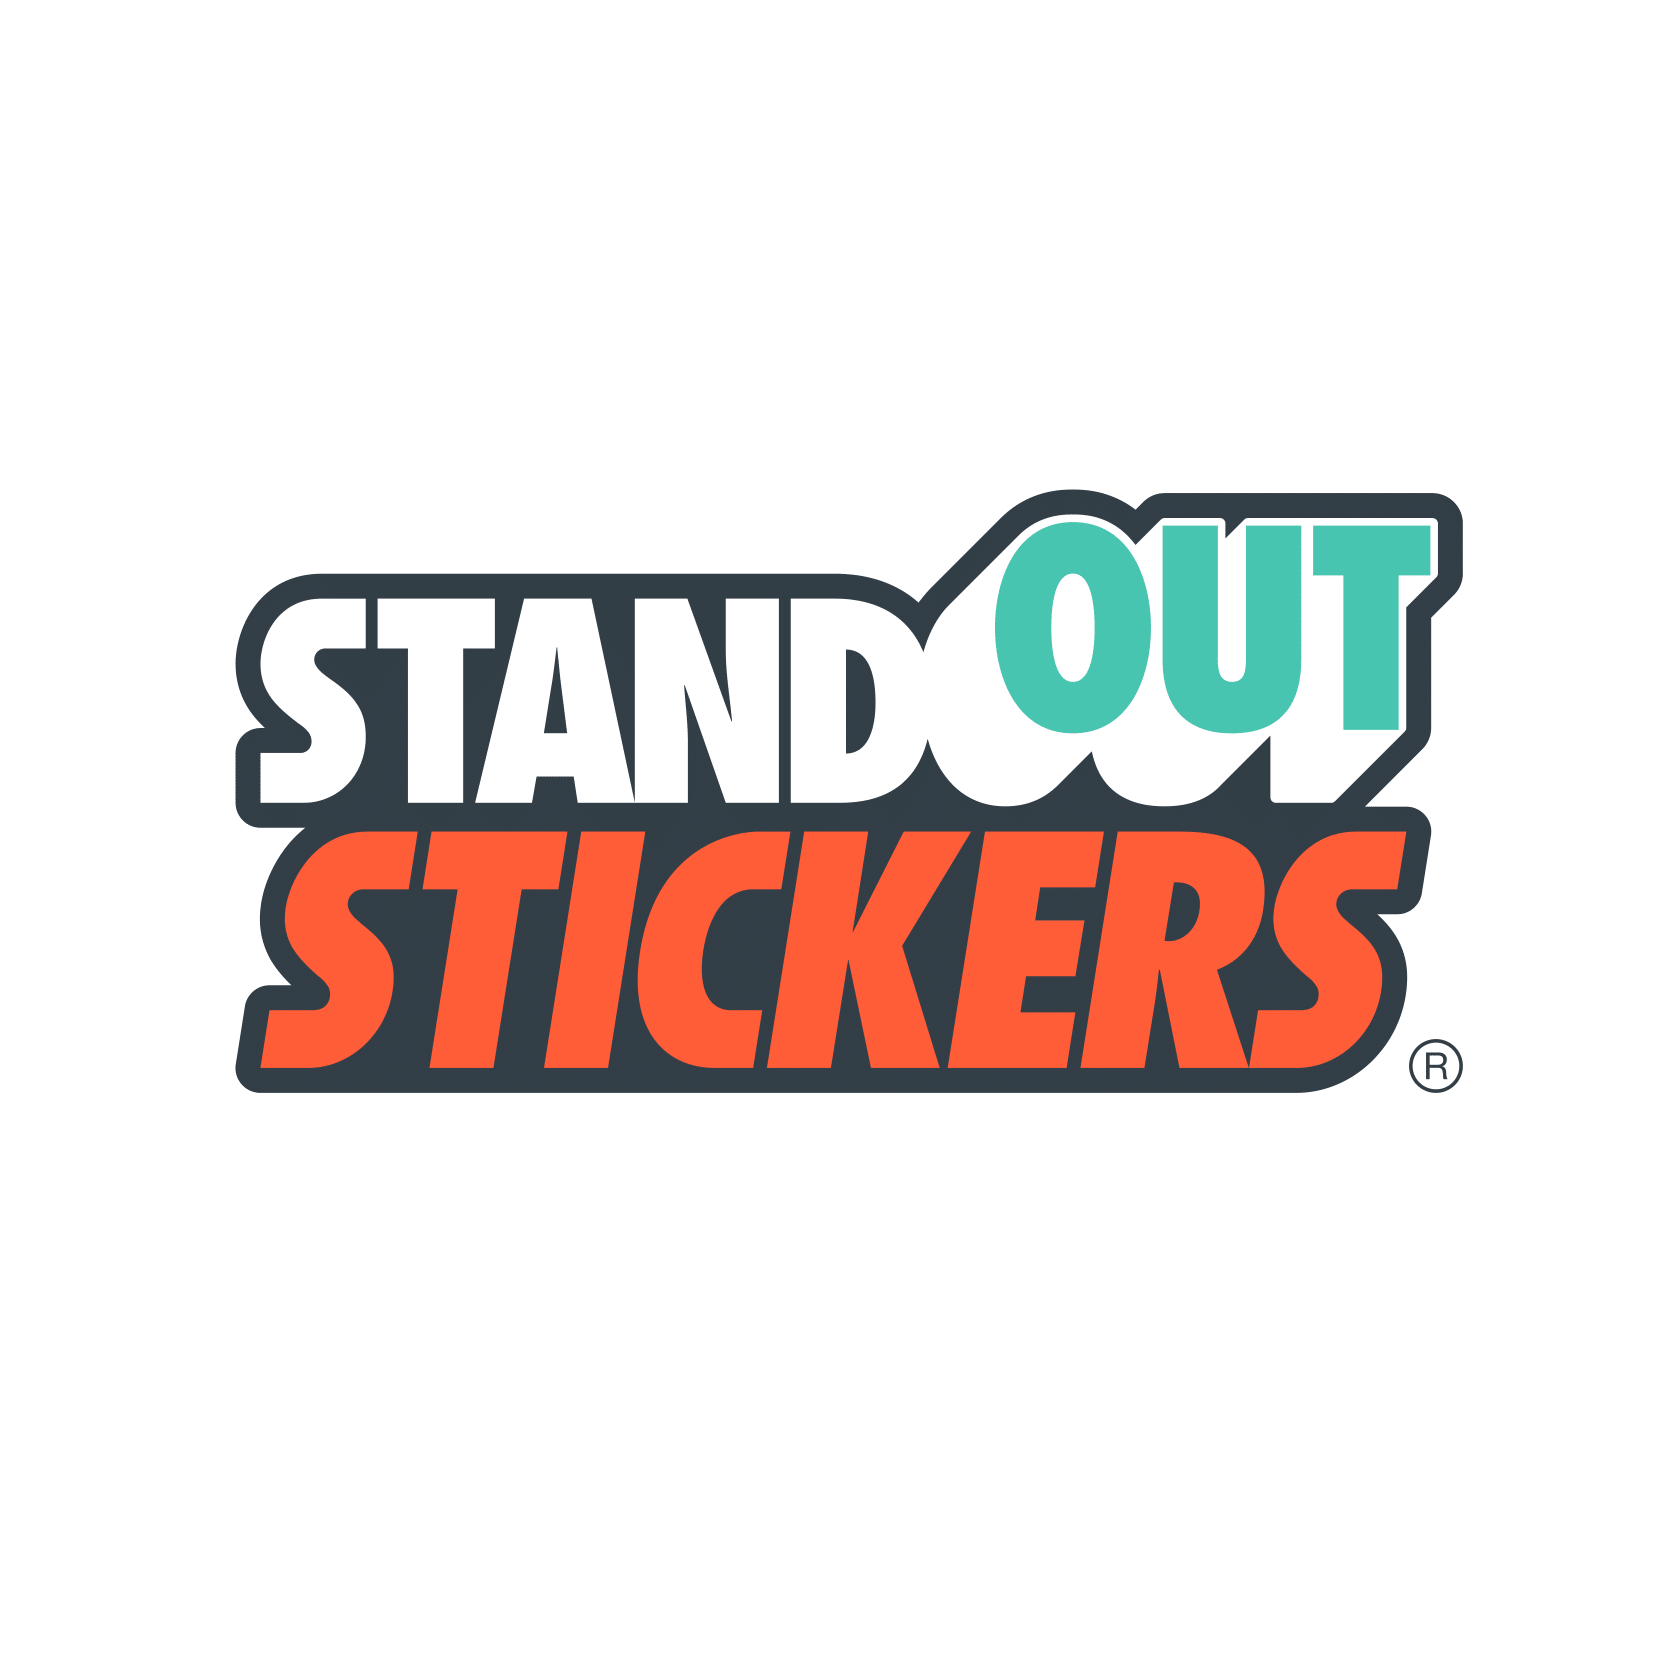 StandOut Stickers bronze sponsorship